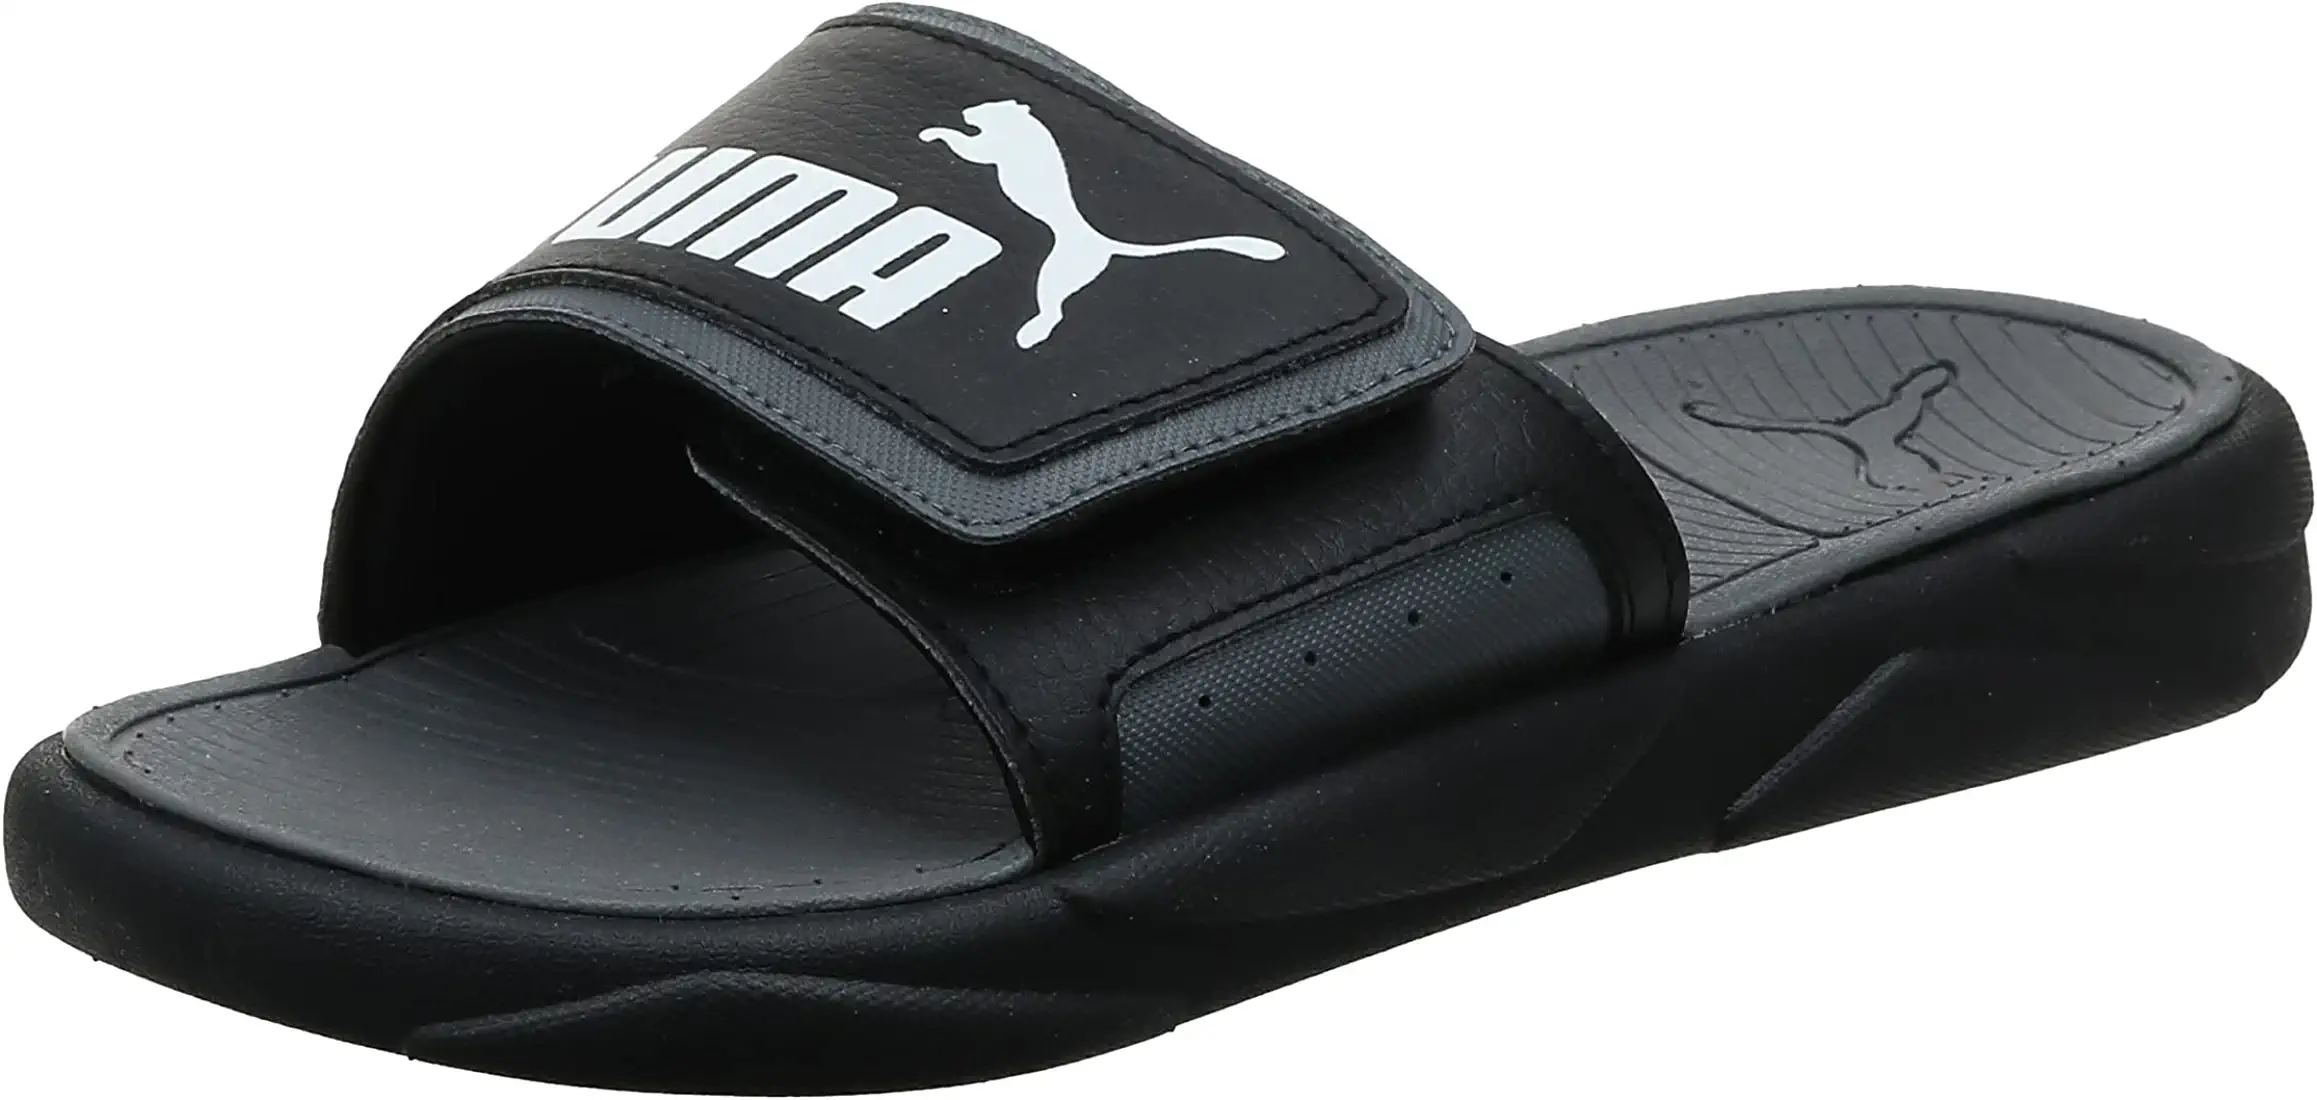 Private: Puma unisex-adult Royalcat Comfort Sandals Slide Sandal